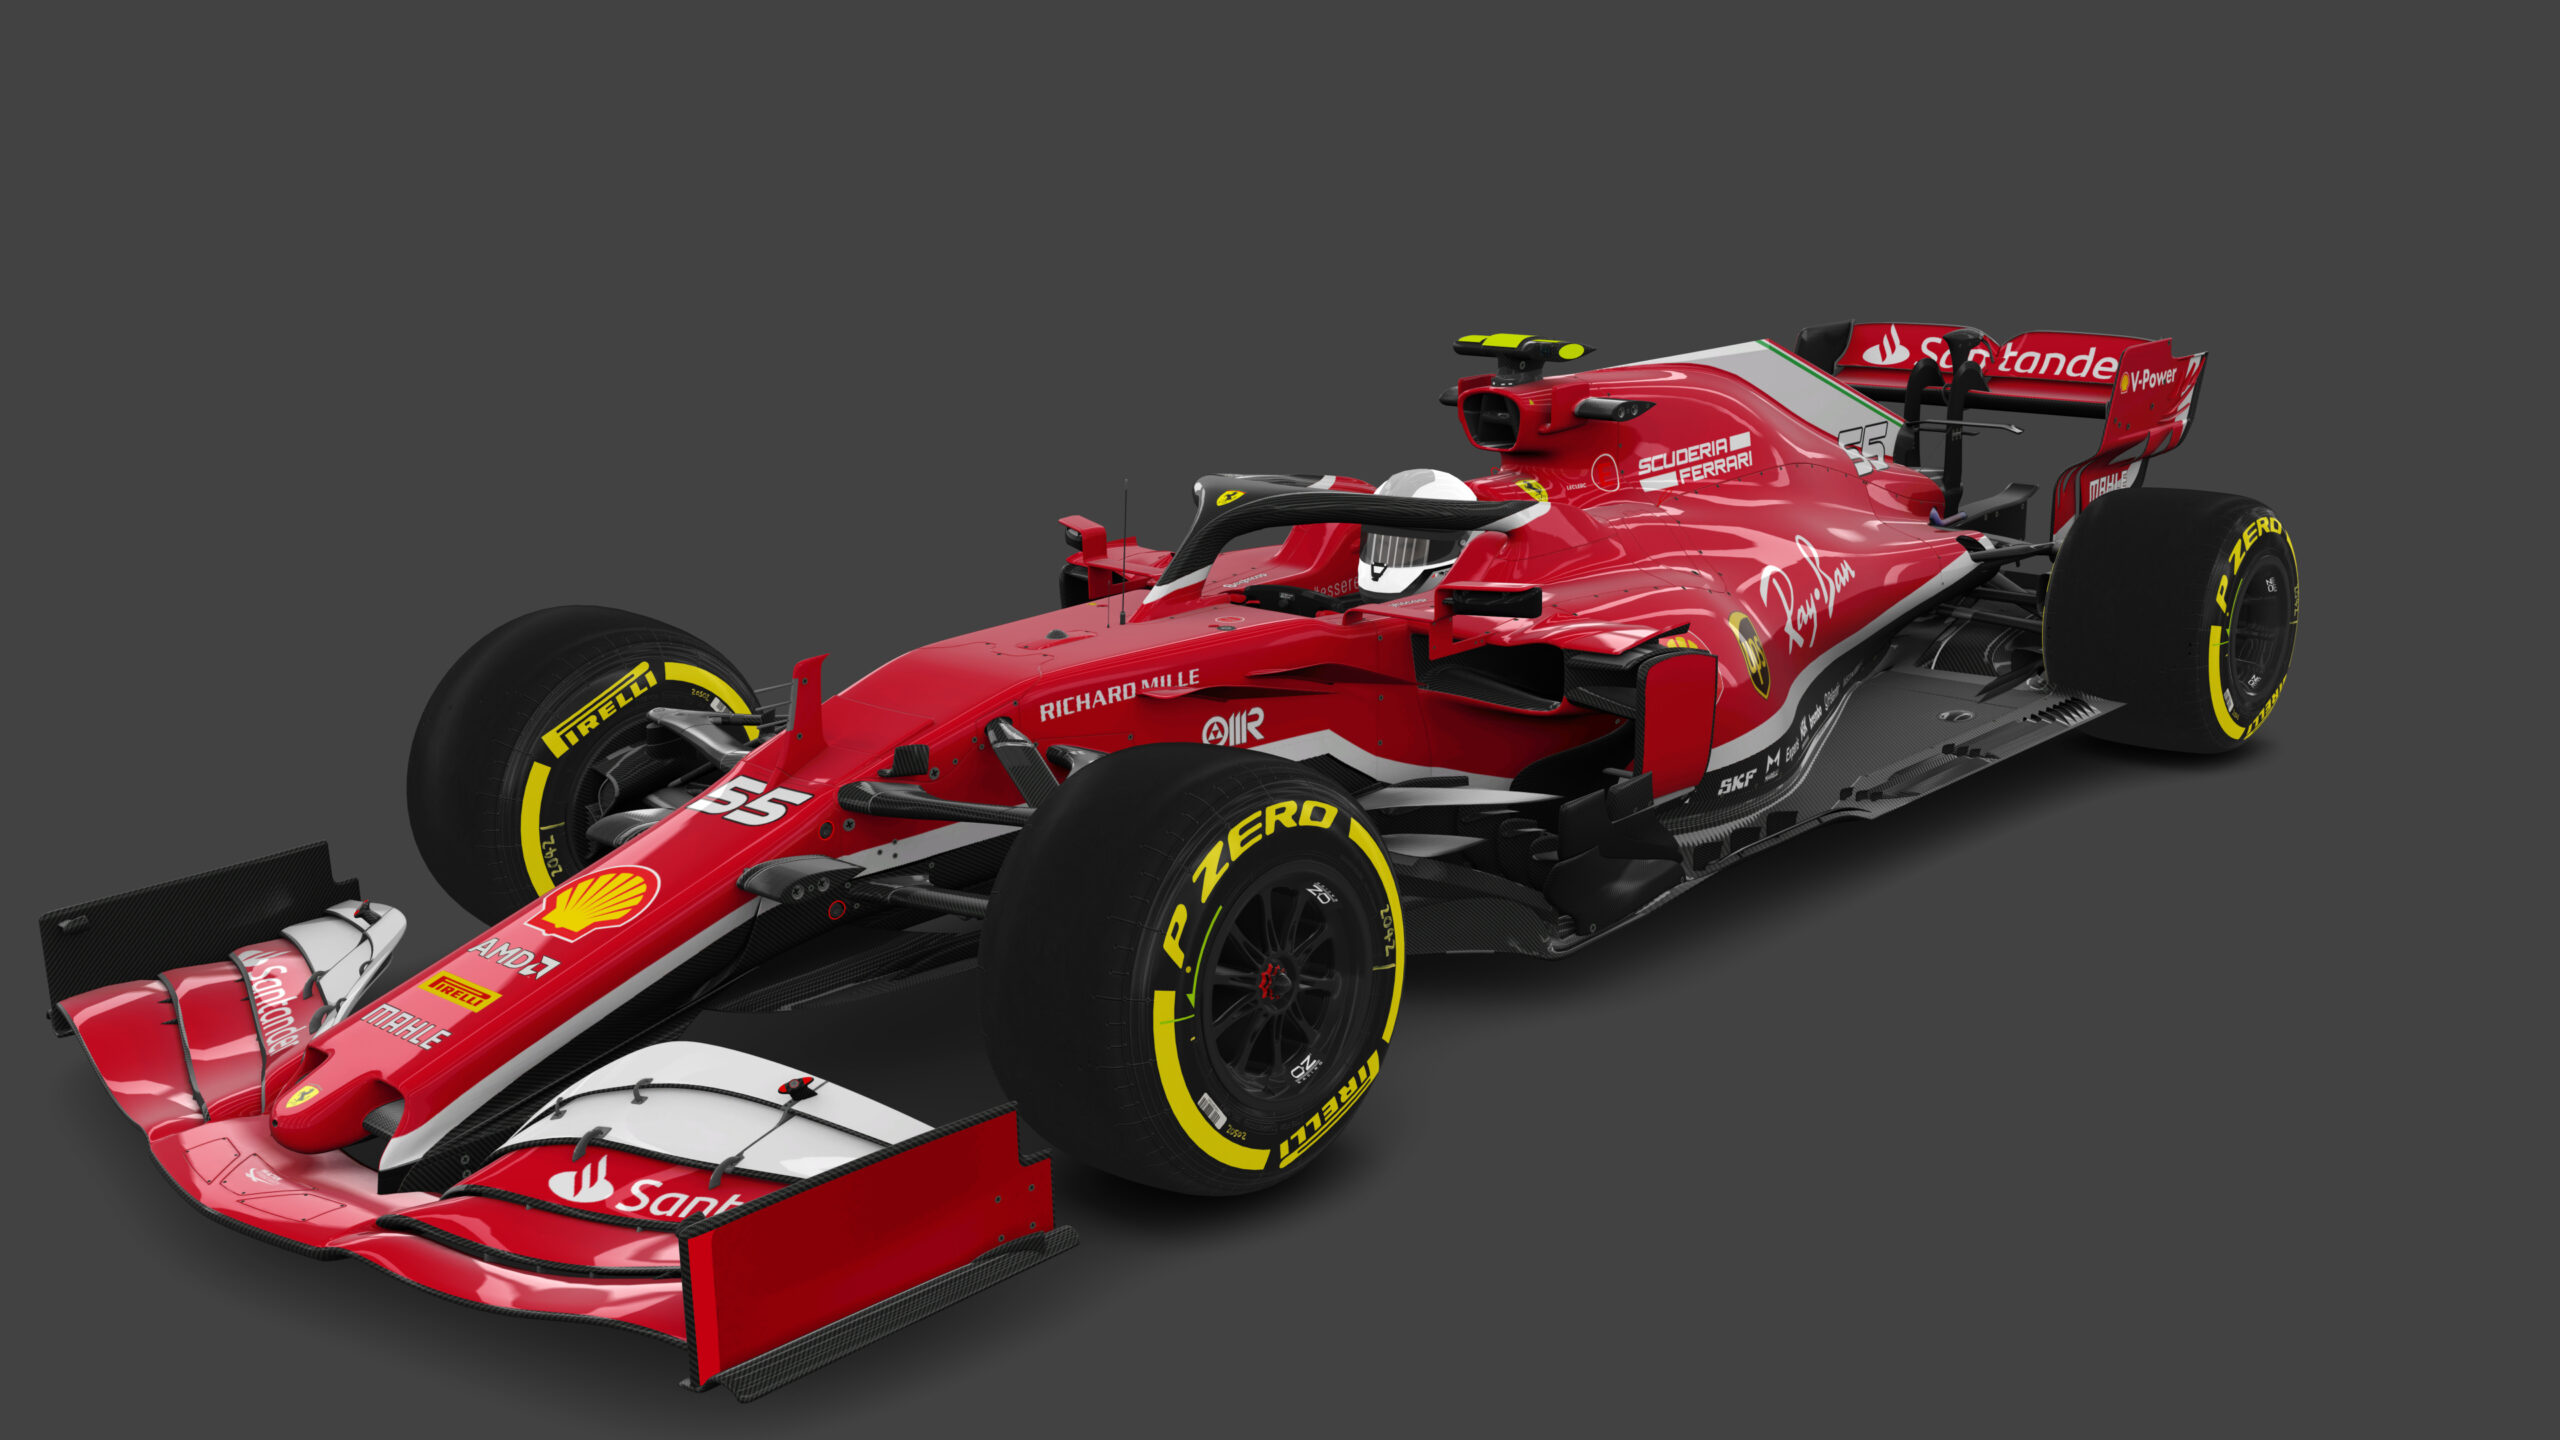 Scuderia Ferrari [55 Carlos Sainz Jr]